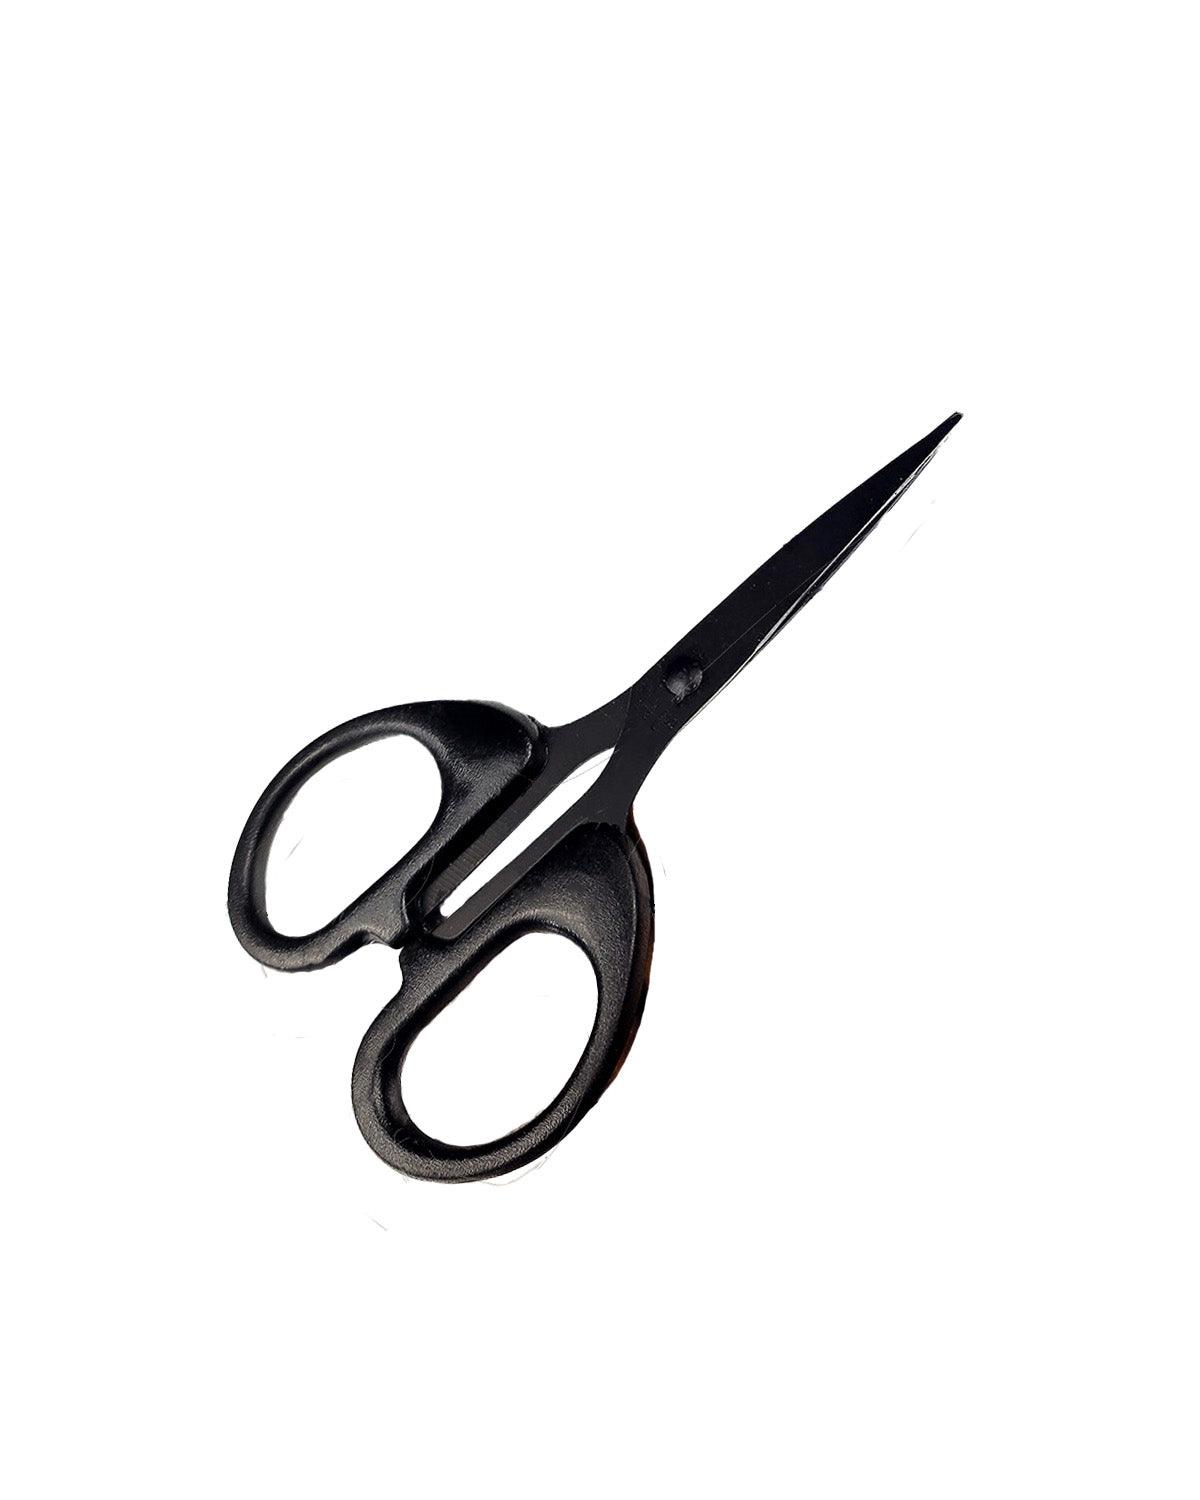 Black mini metal and plastic crafting scissors by Jane's Agenda.